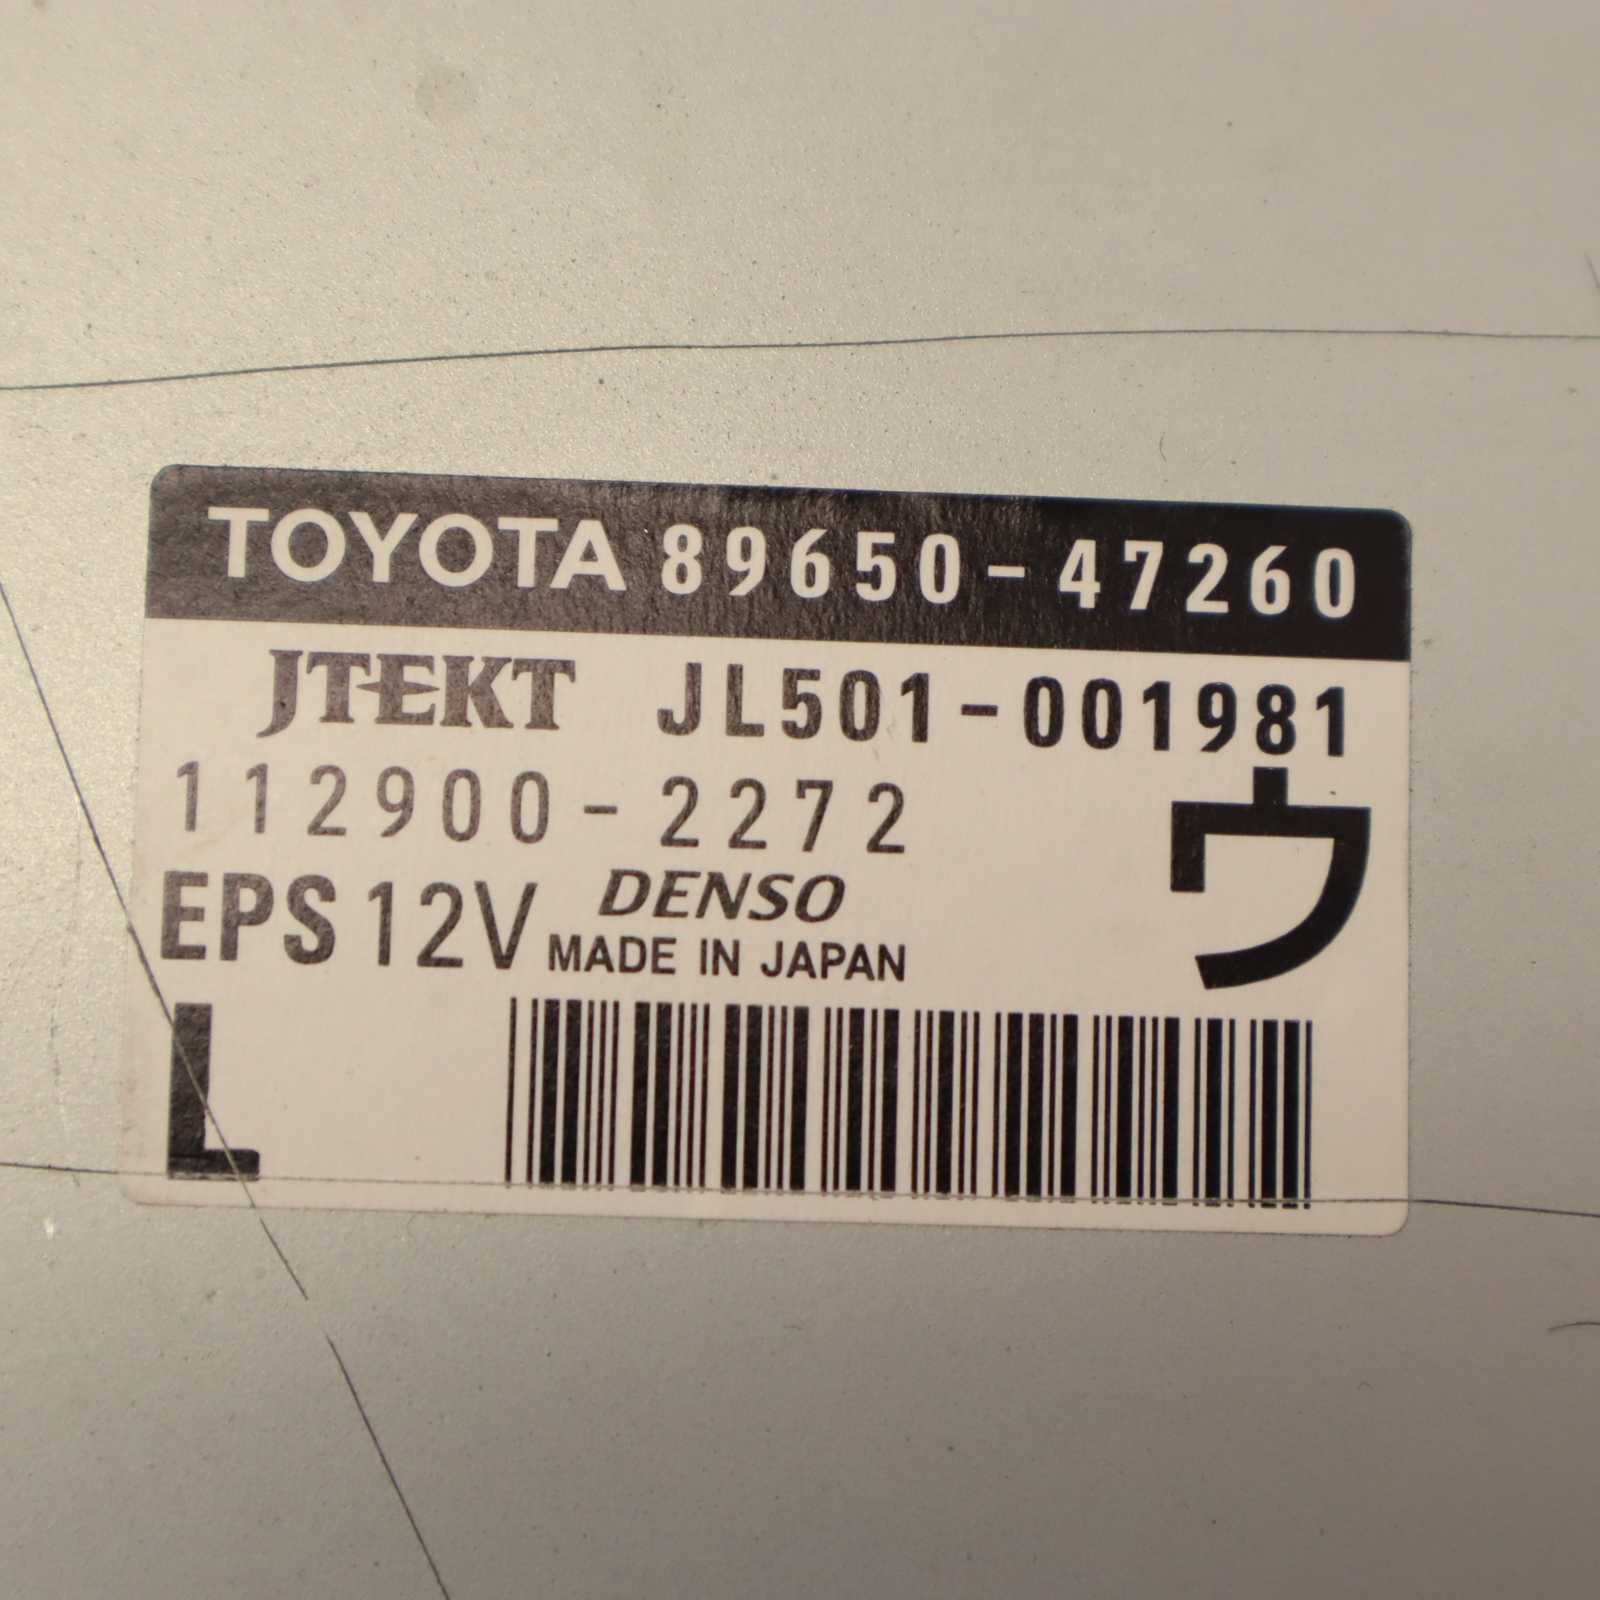 Toyota Prius Mk3 Power Steering Control Unit Module 89650-47260 for ...